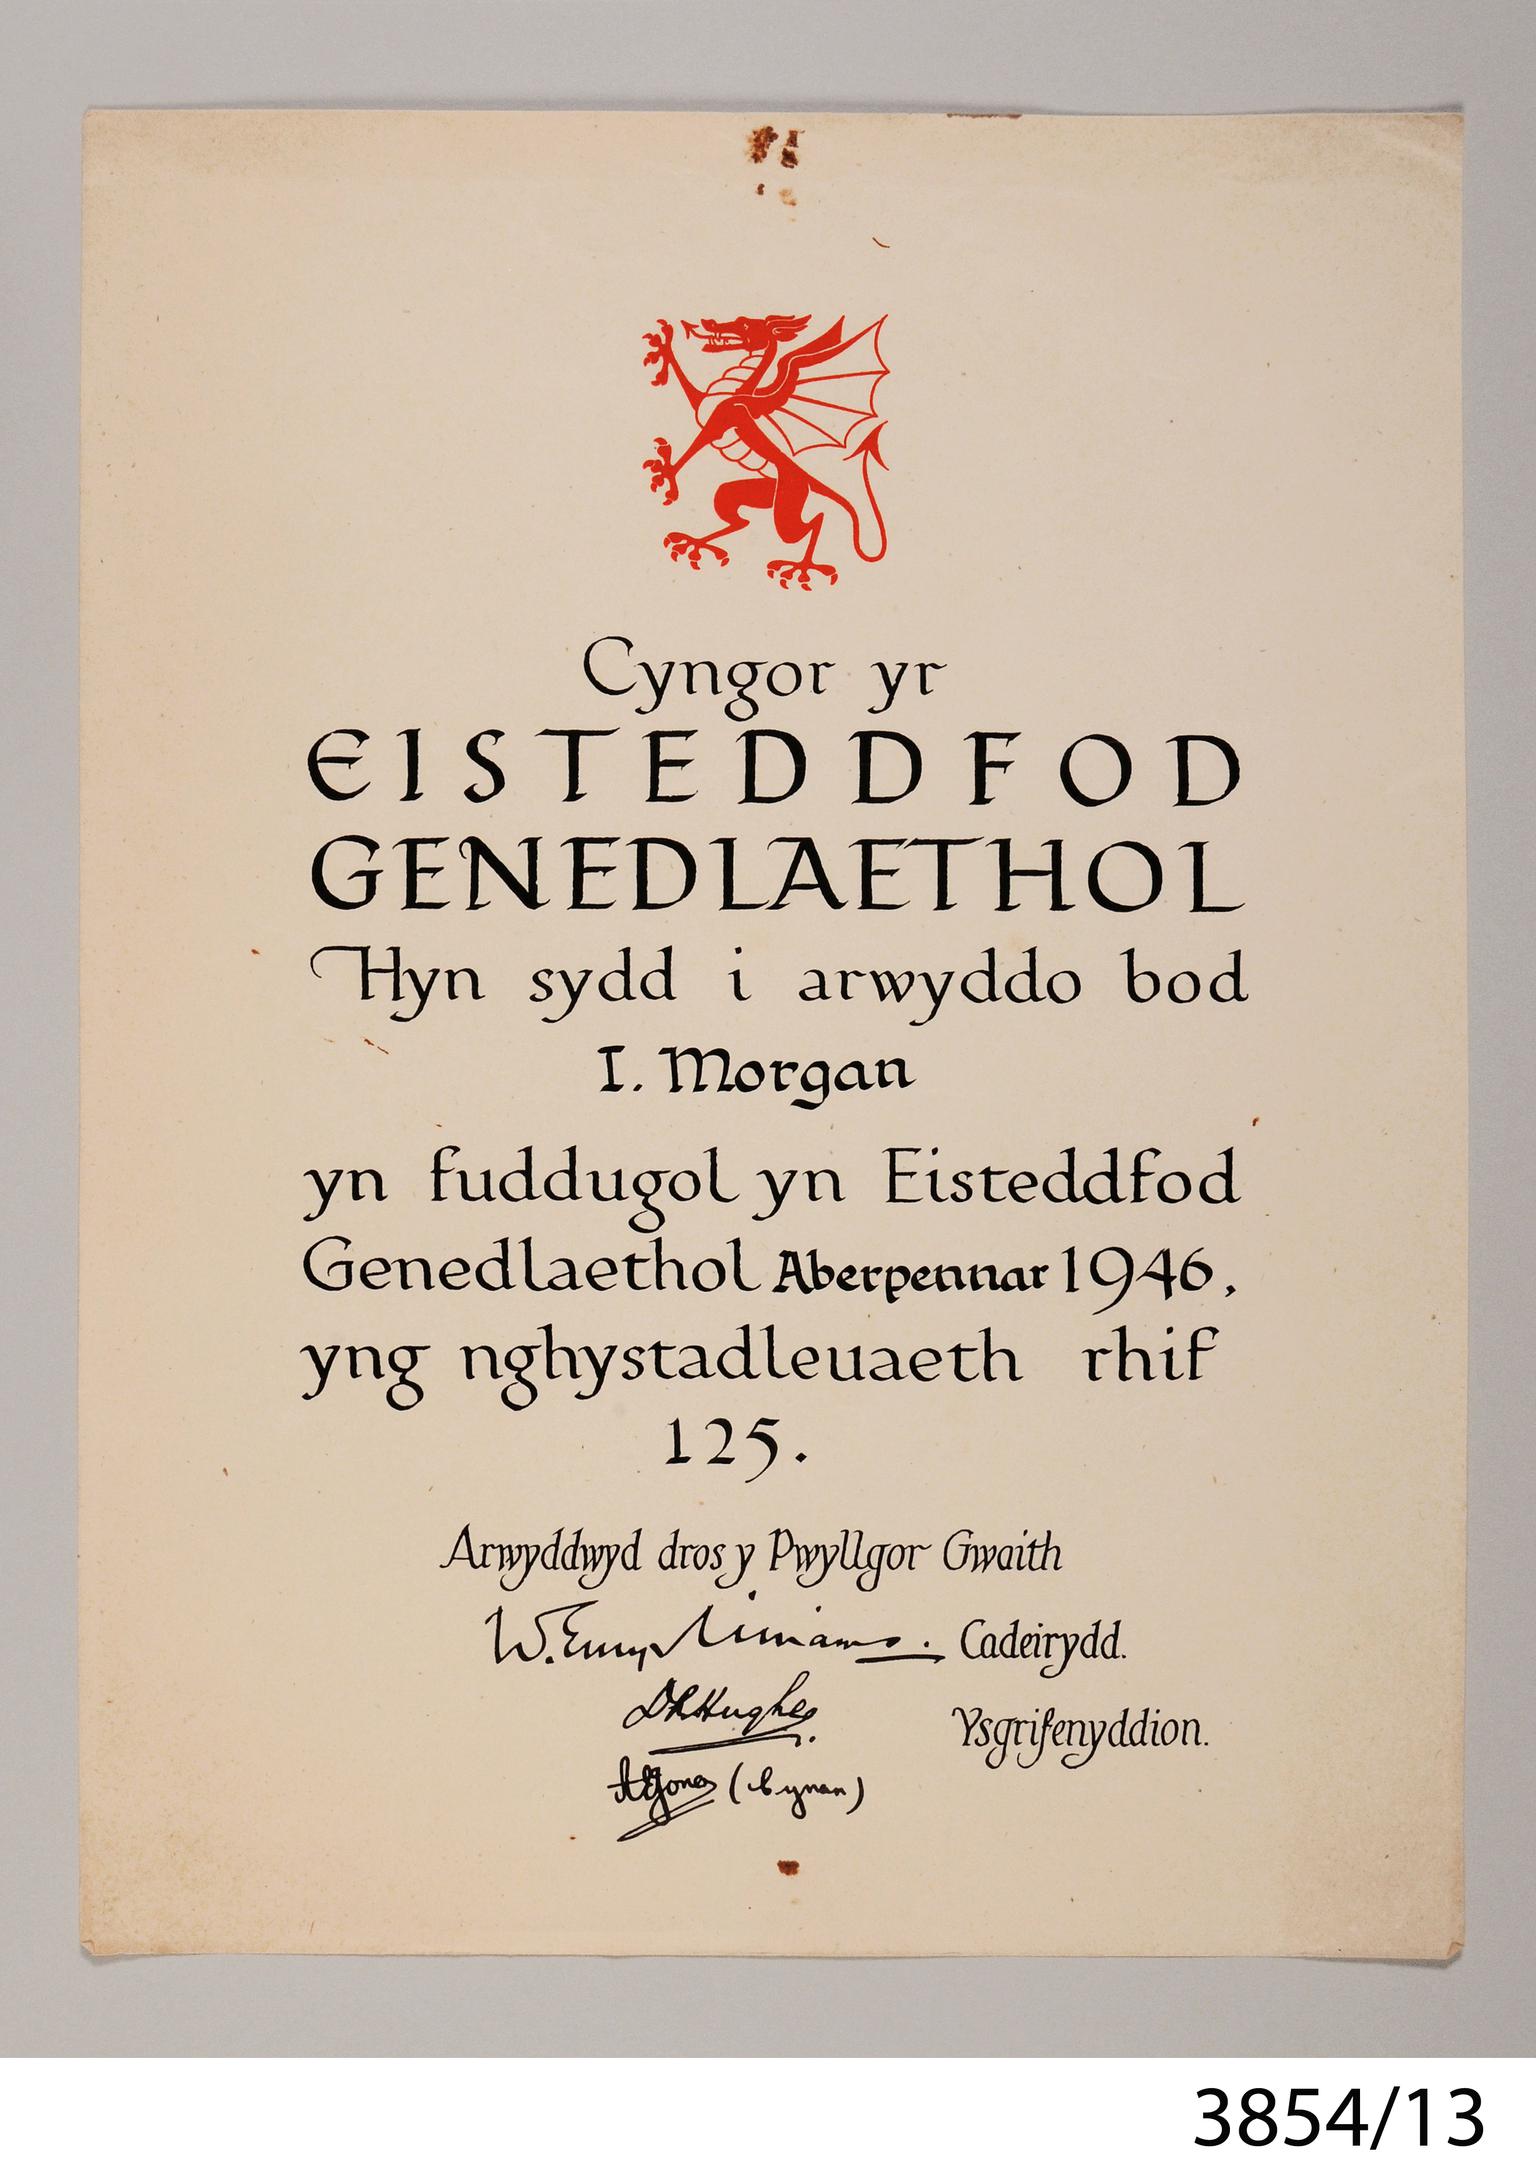 Eisteddfod certificate